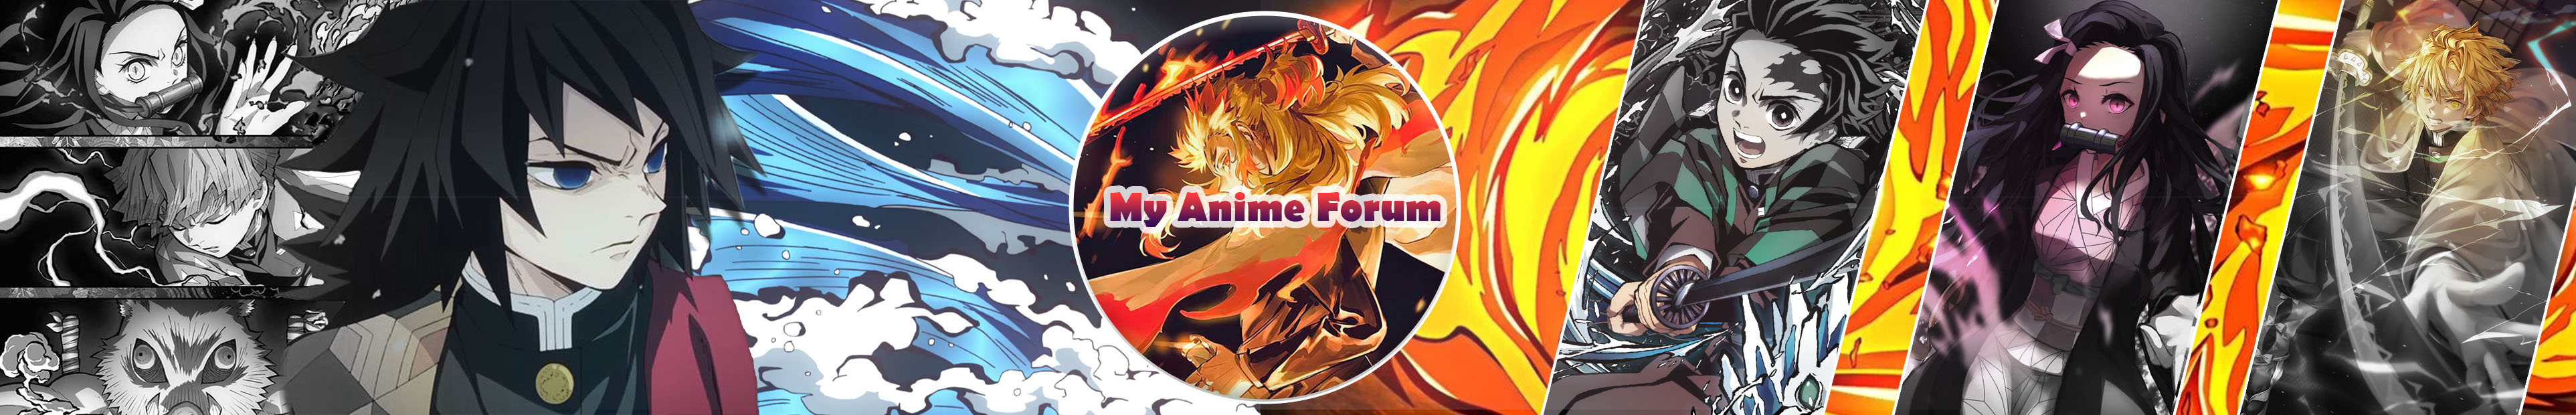 My Anime Forum